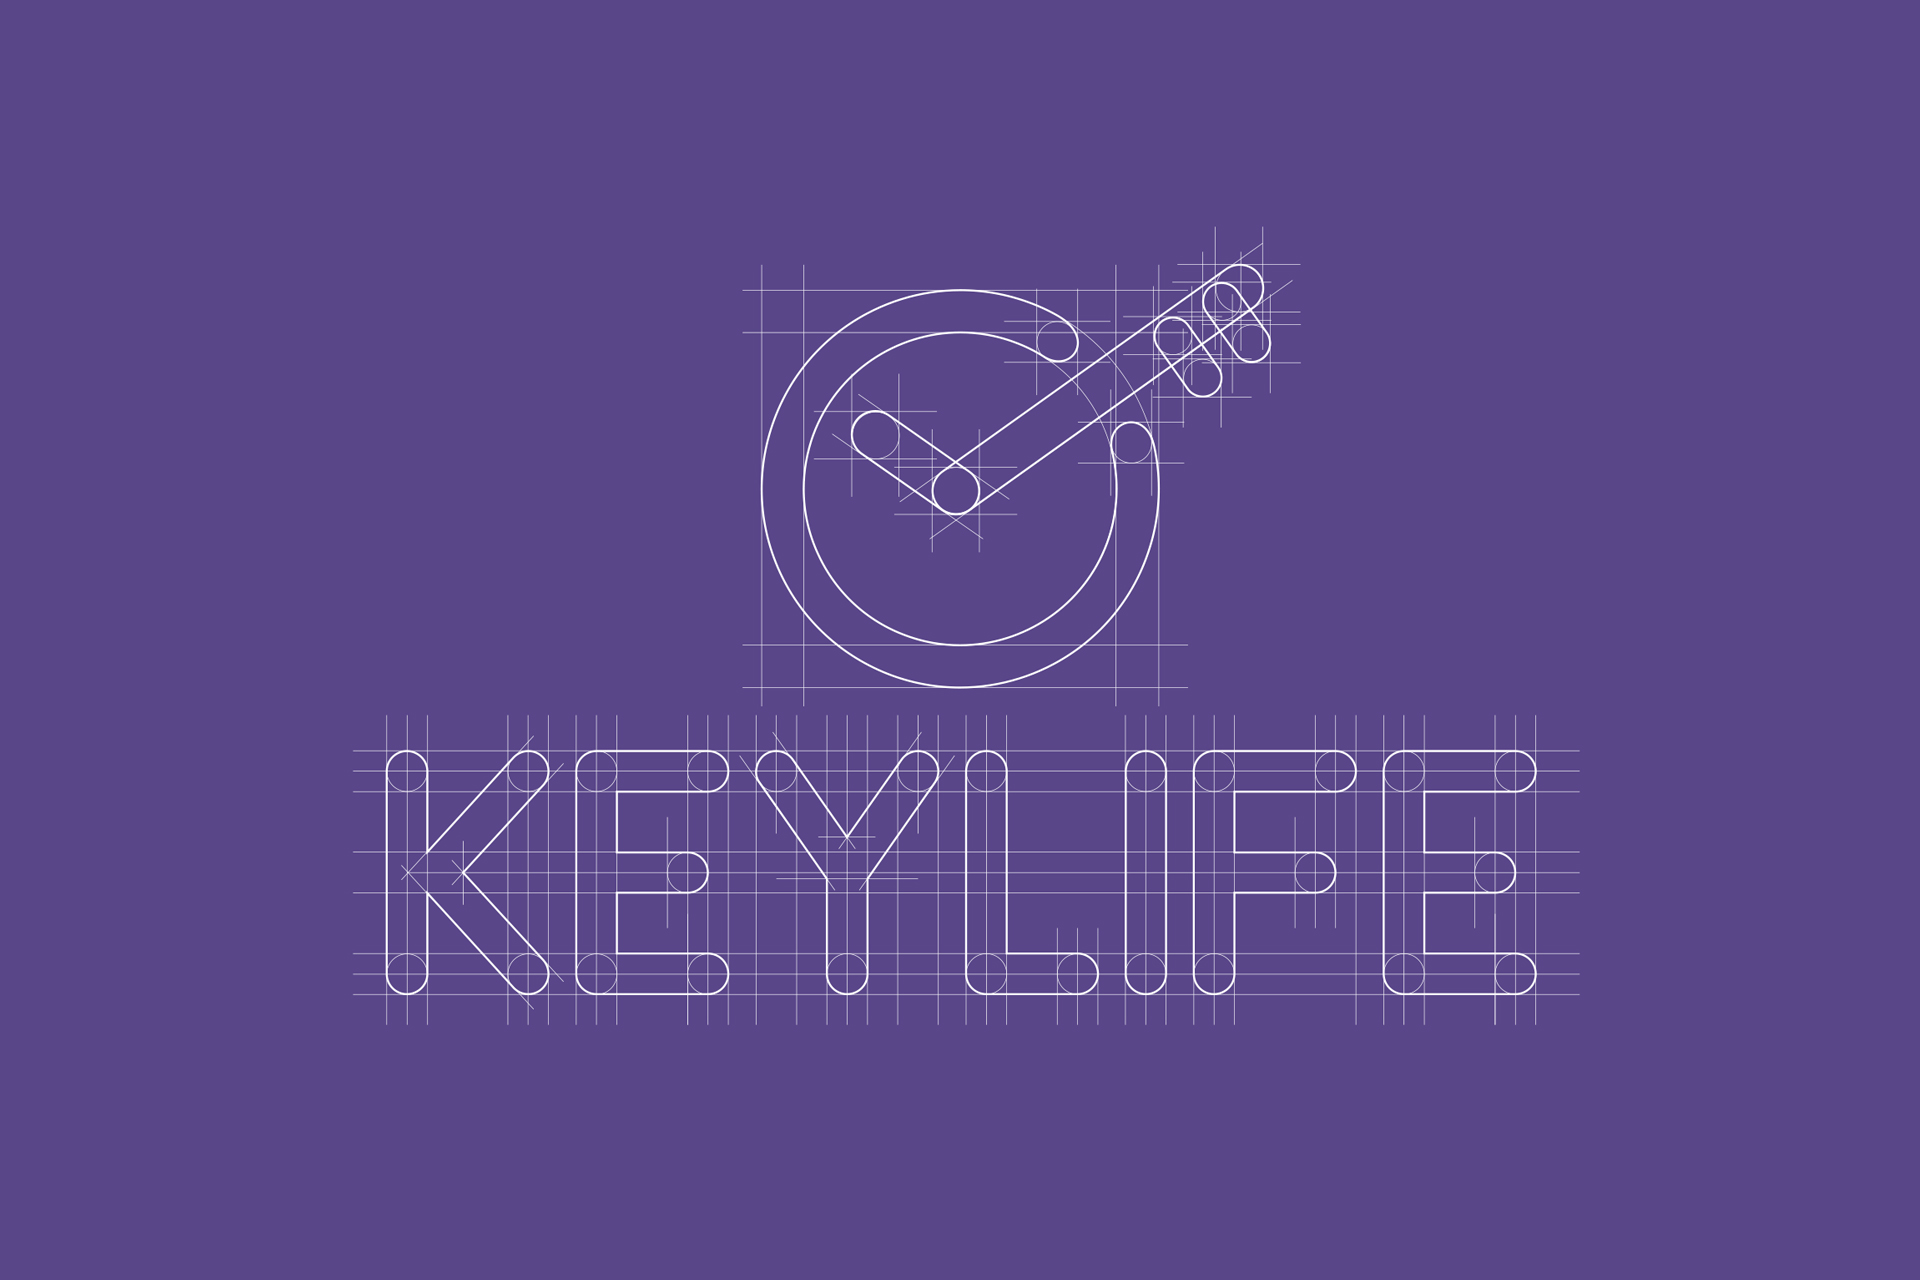 Keylife OnDesign Logo